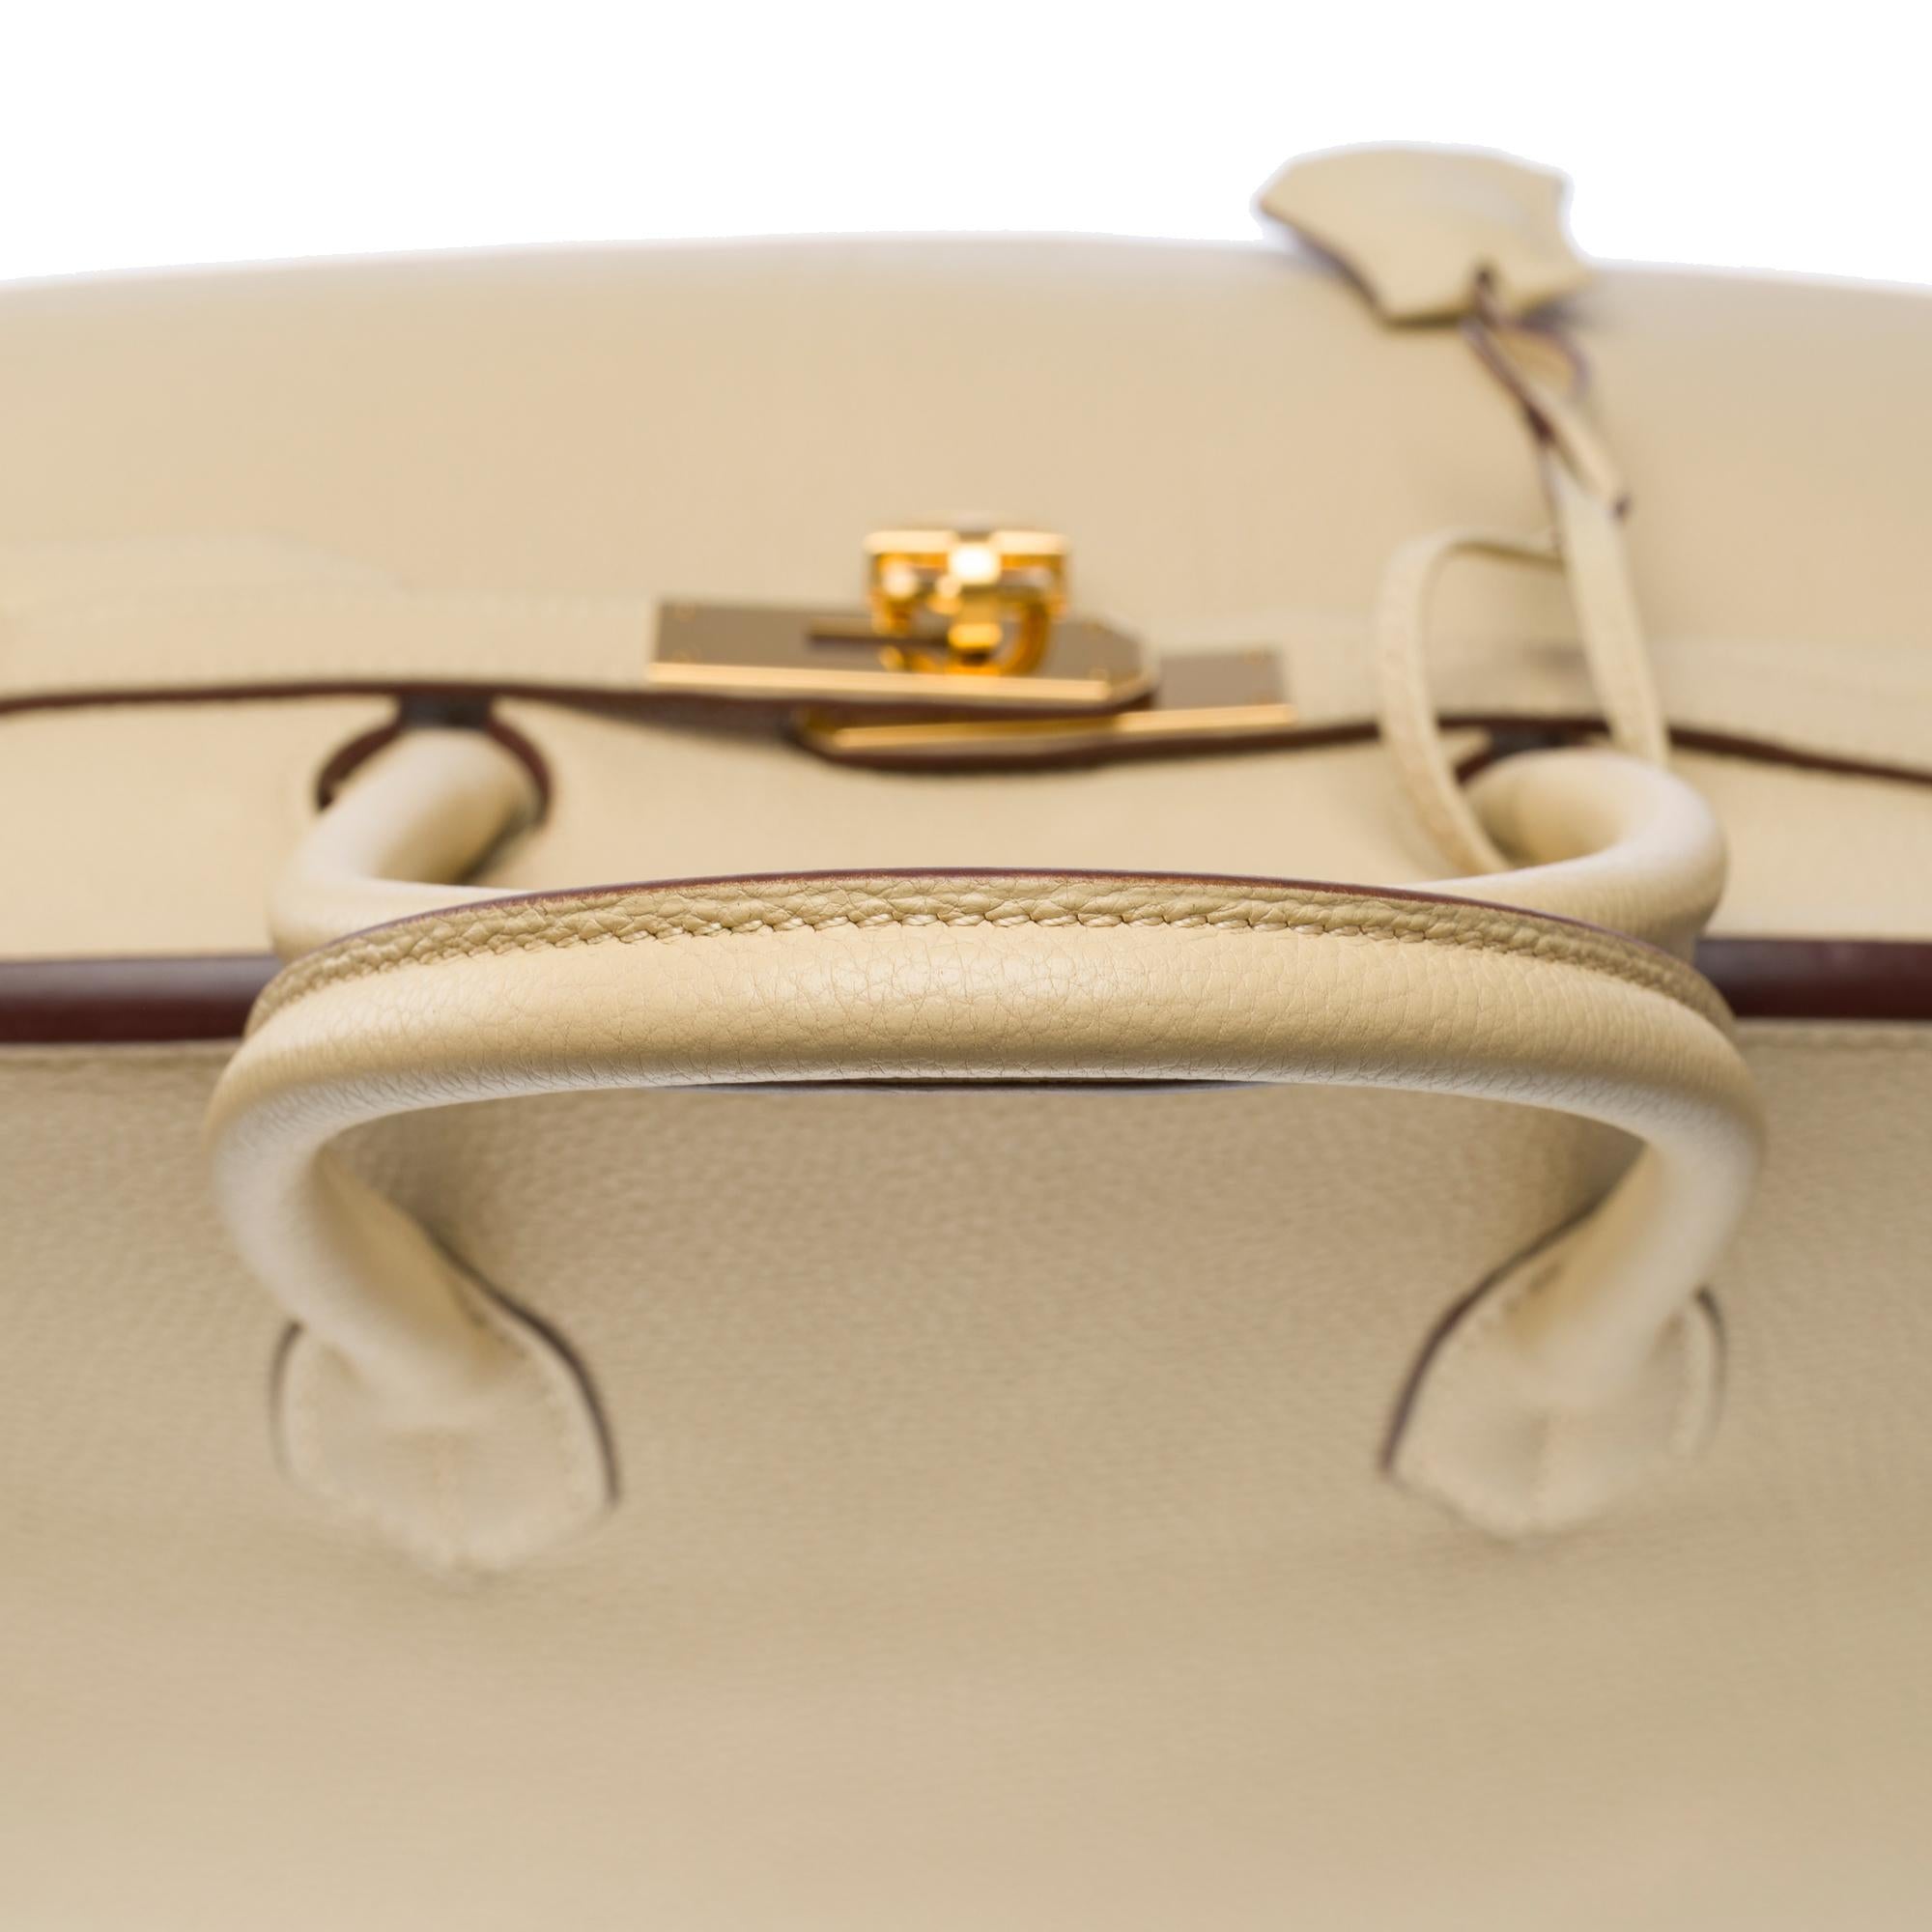 Amazing Hermès Birkin 35 handbag in Parchemin Togo leather, GHW 6